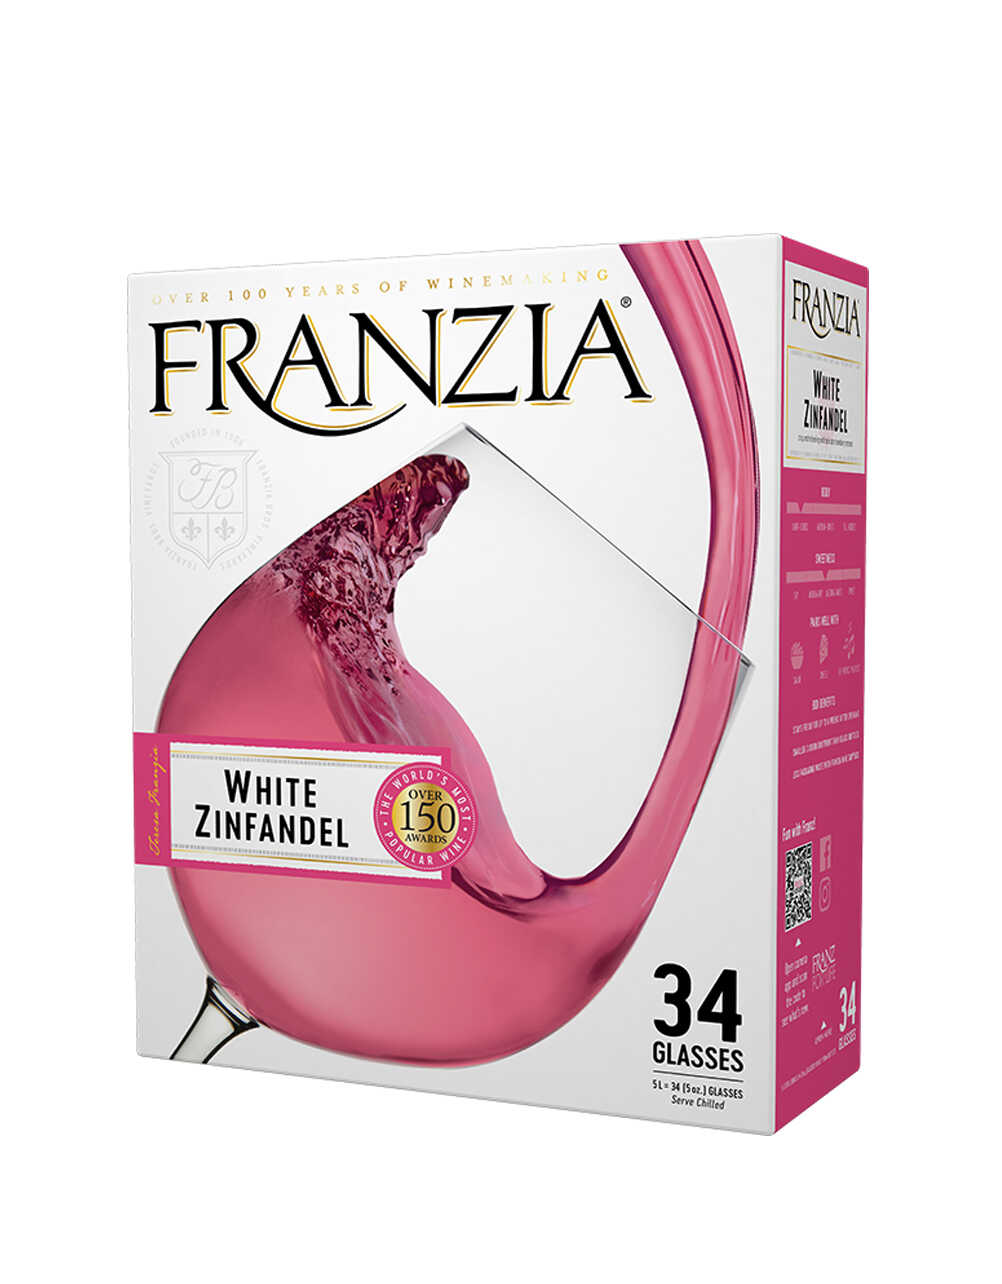 Franzia White Zinfandel Rose Wine 5L